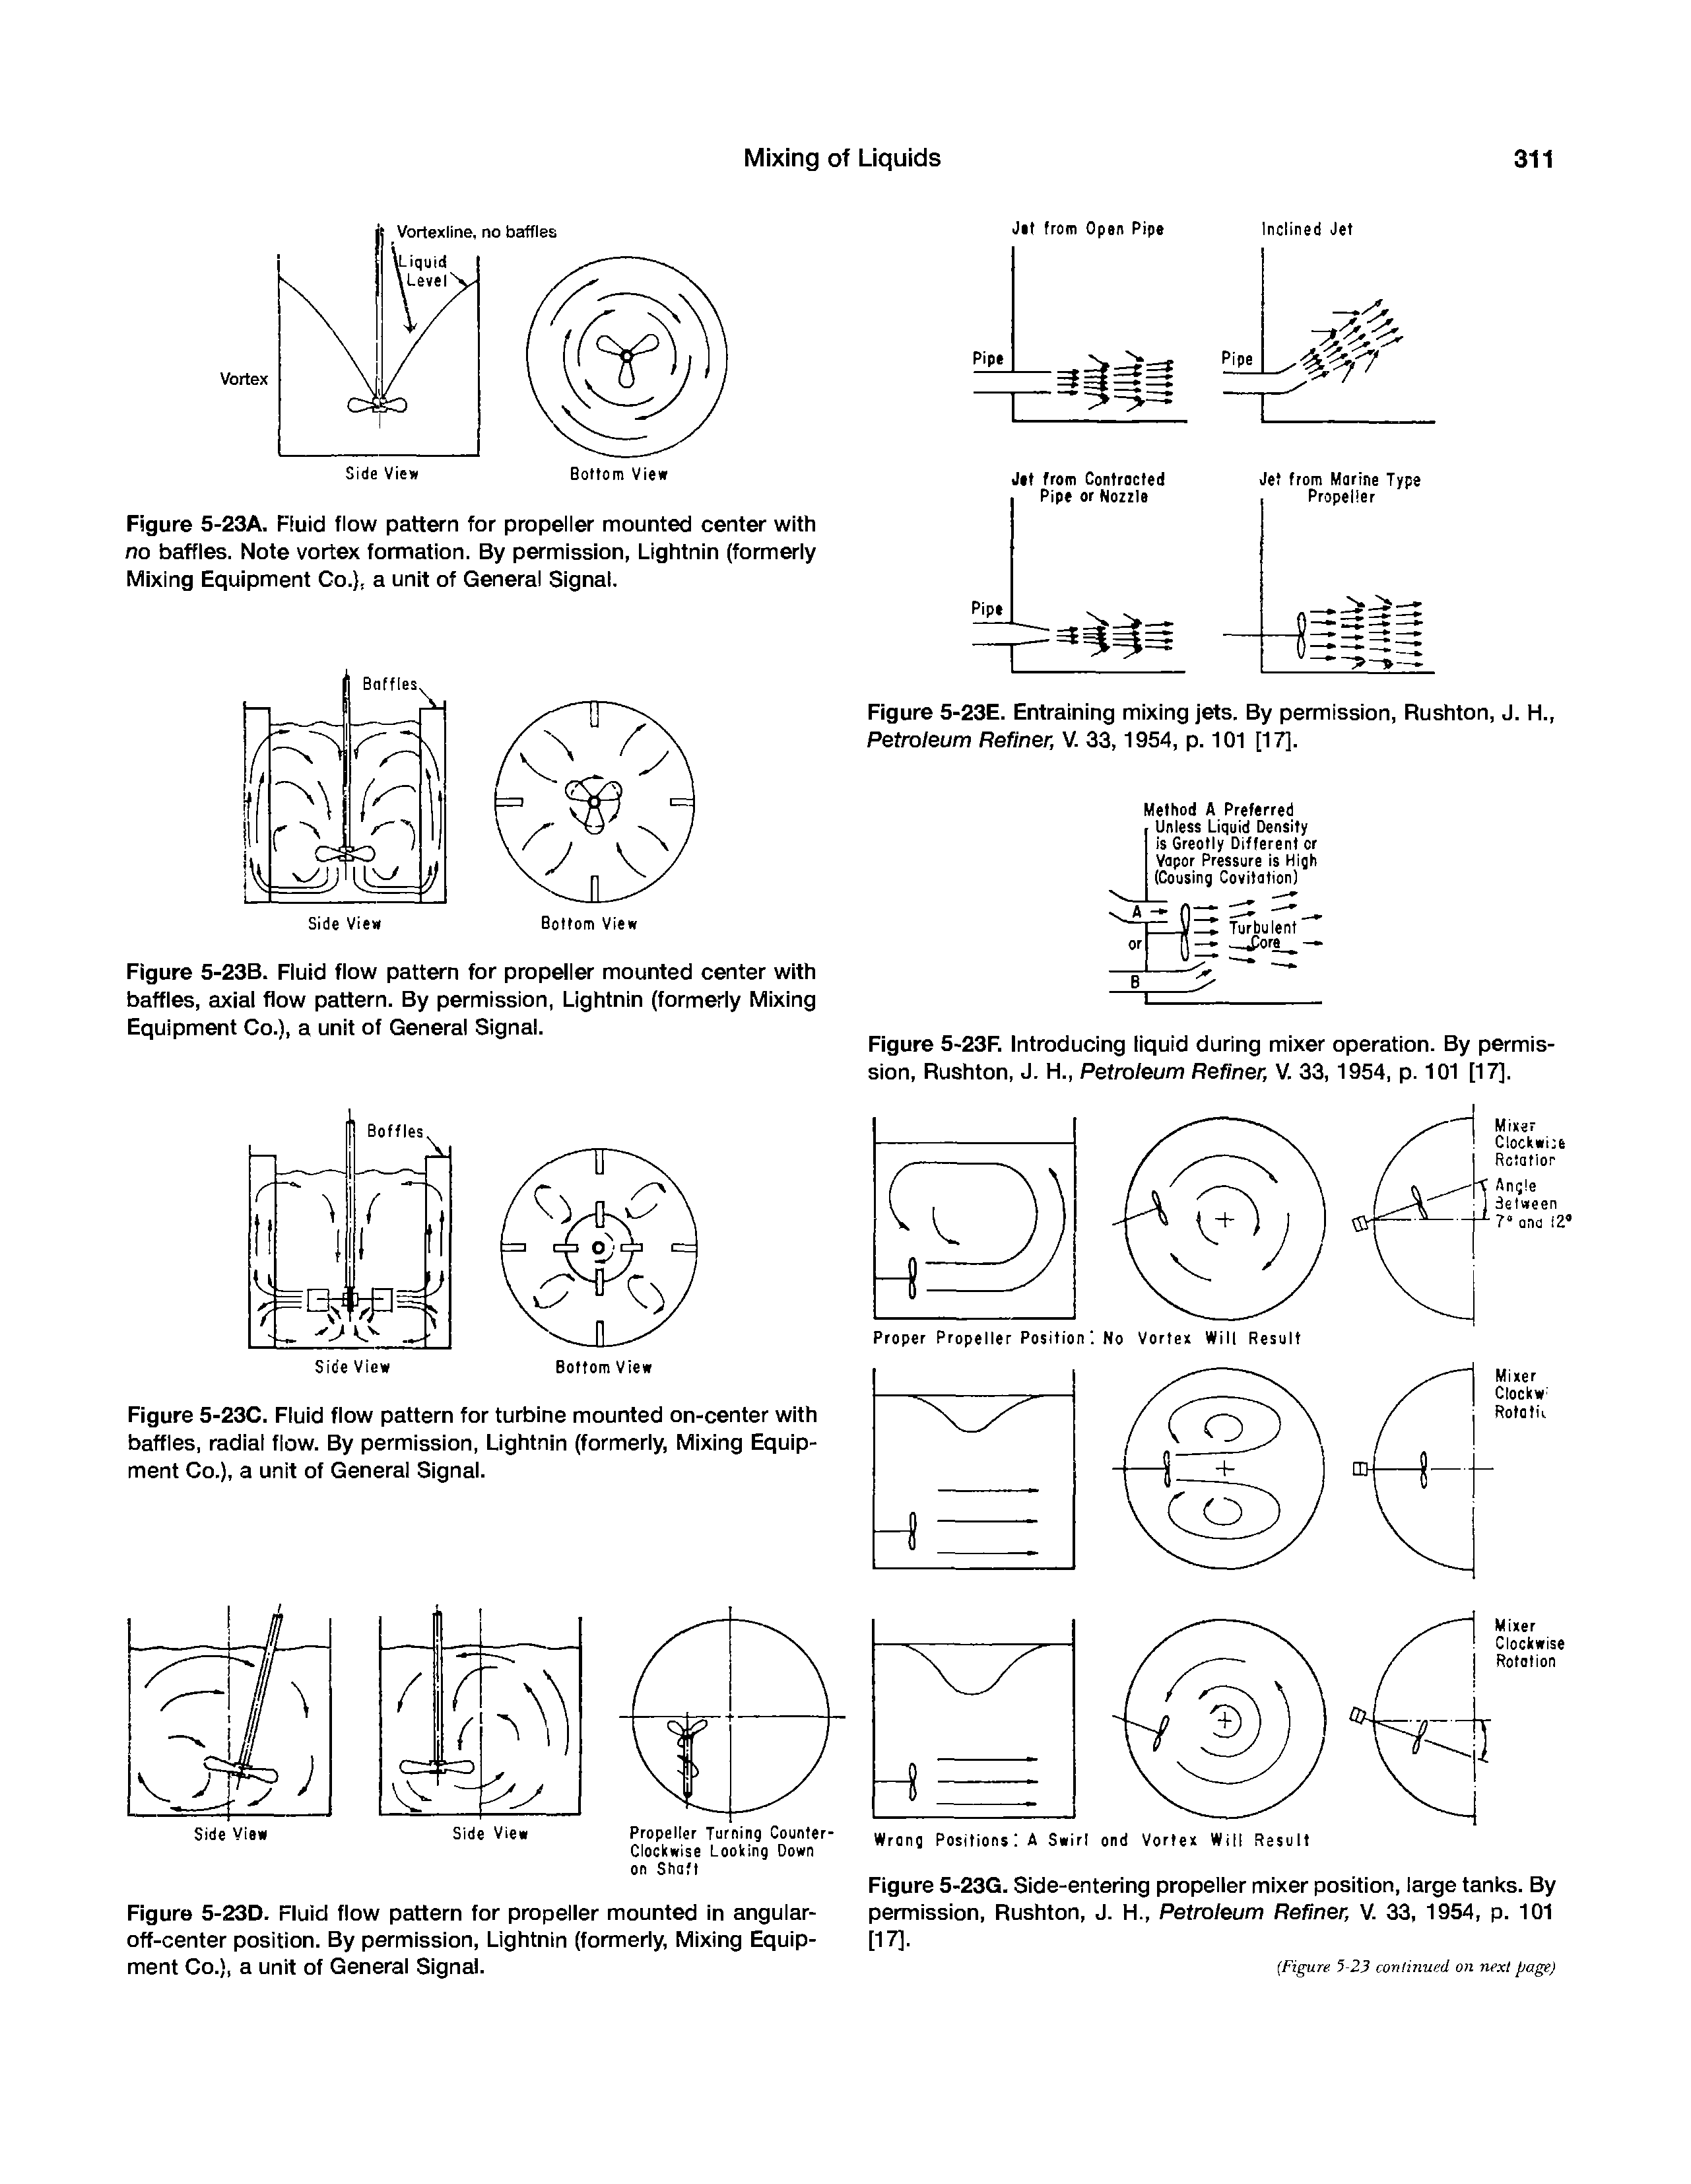 Figure 5-23G. Side-entering propeller mixer position, large tanks. By permission, Rushton, J. H., Petroleum Refiner, V. 33, 1954, p. 101 [17].